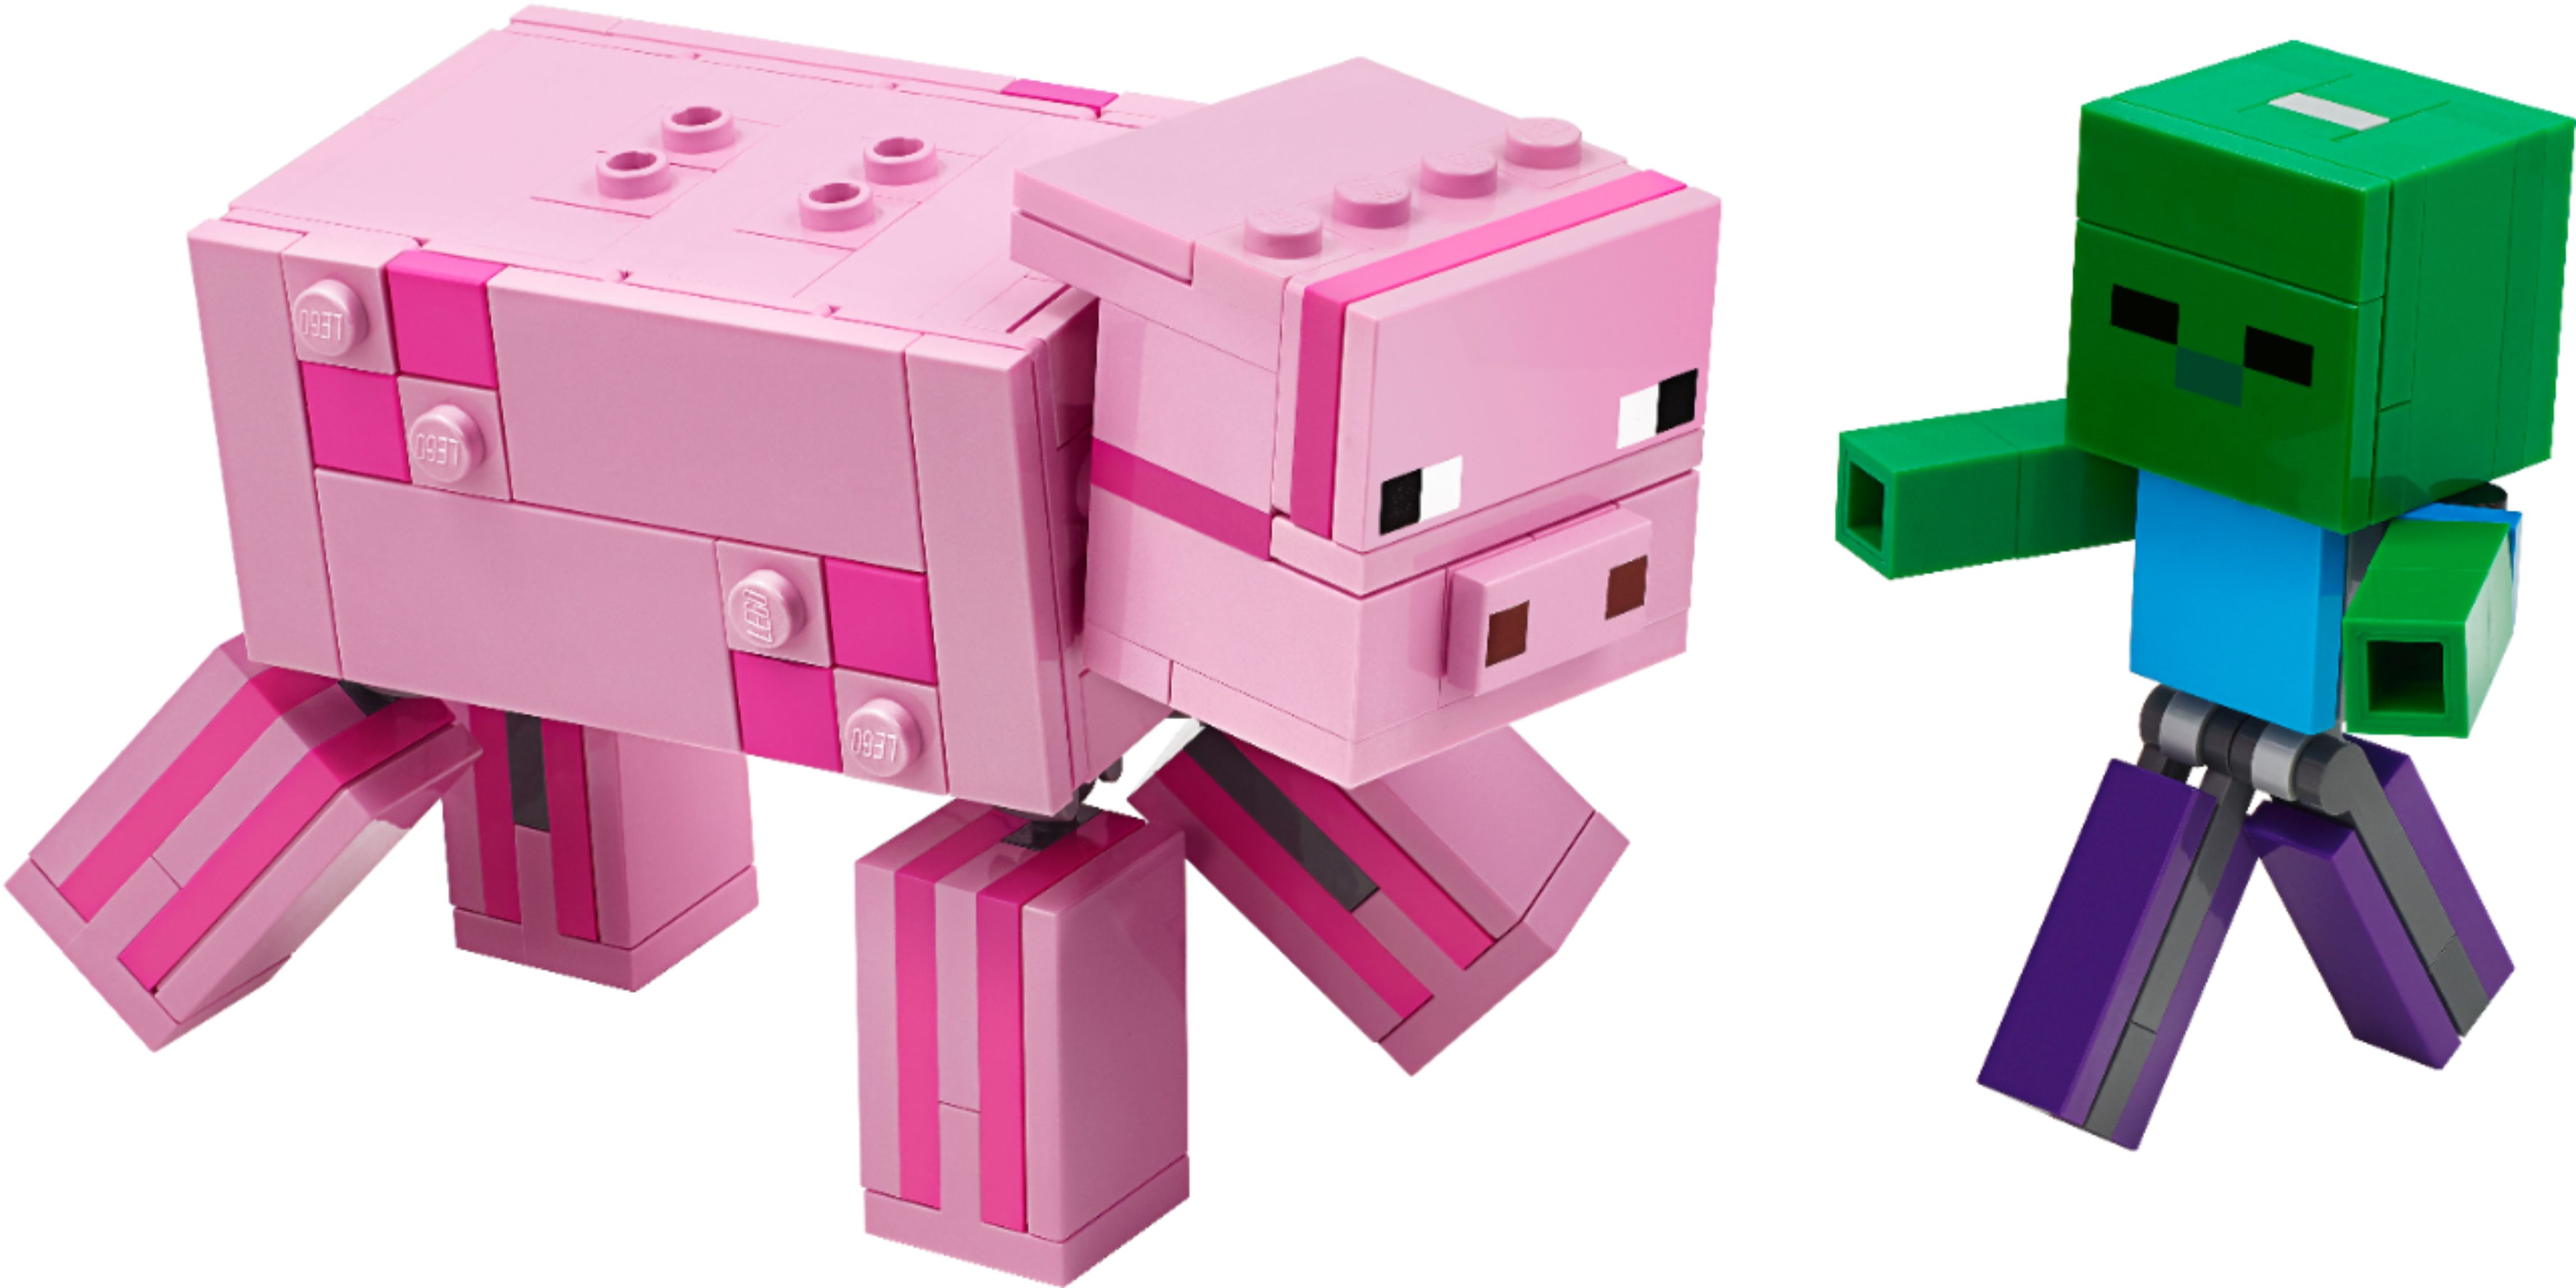 Piggy Roblox Lego by S0UNDBIT on DeviantArt